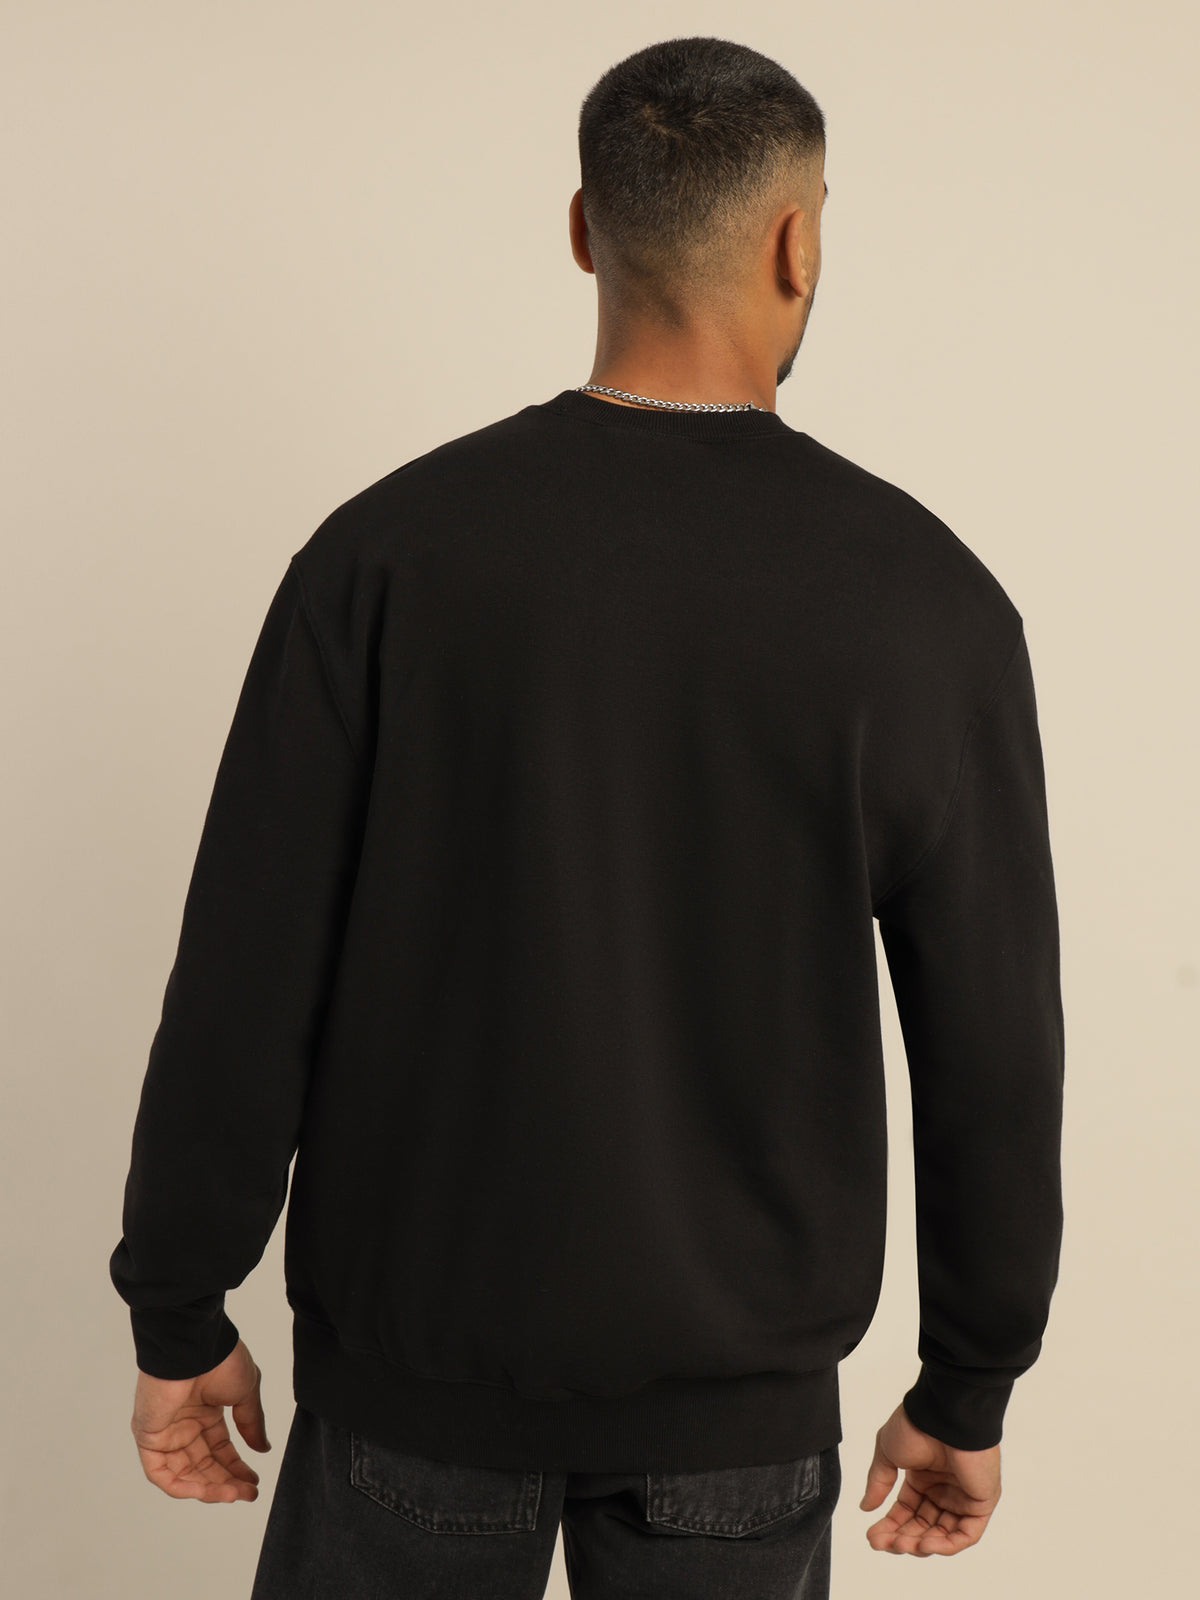 Pocket Sweatshirt in Black